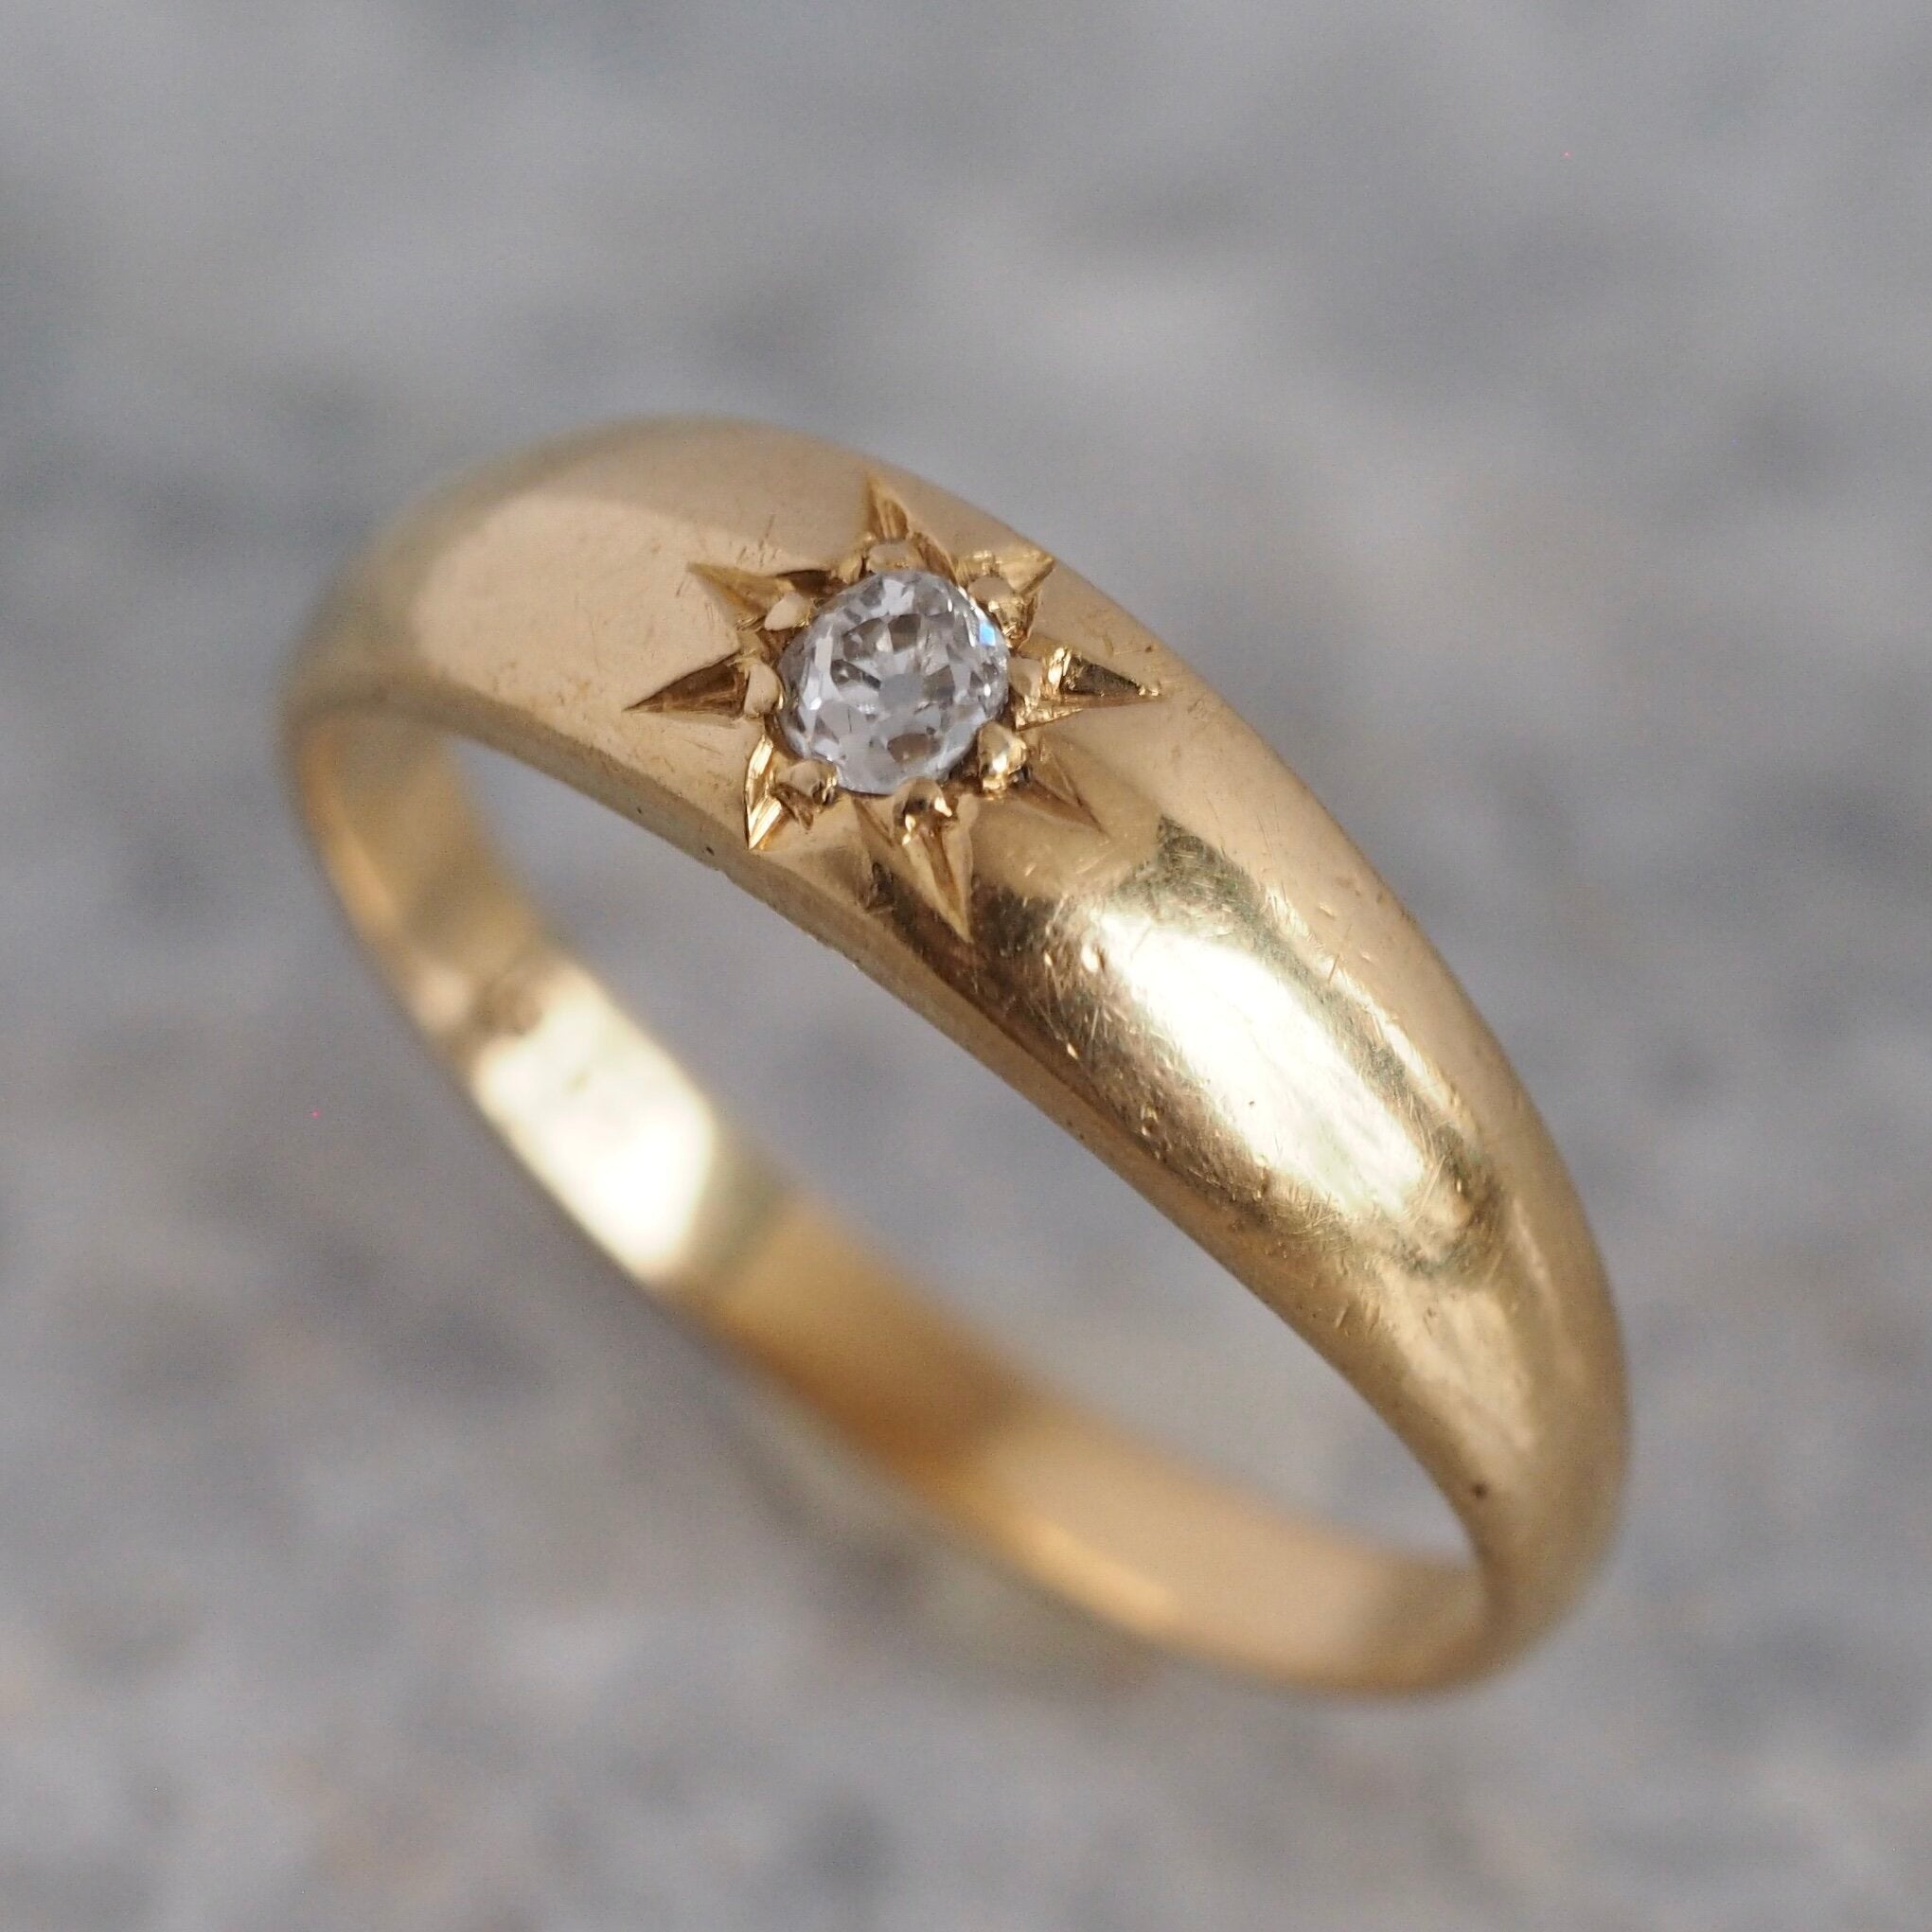 Antique English 18k Gold Old Mine Cut Flush Set Diamond Starburst Ring